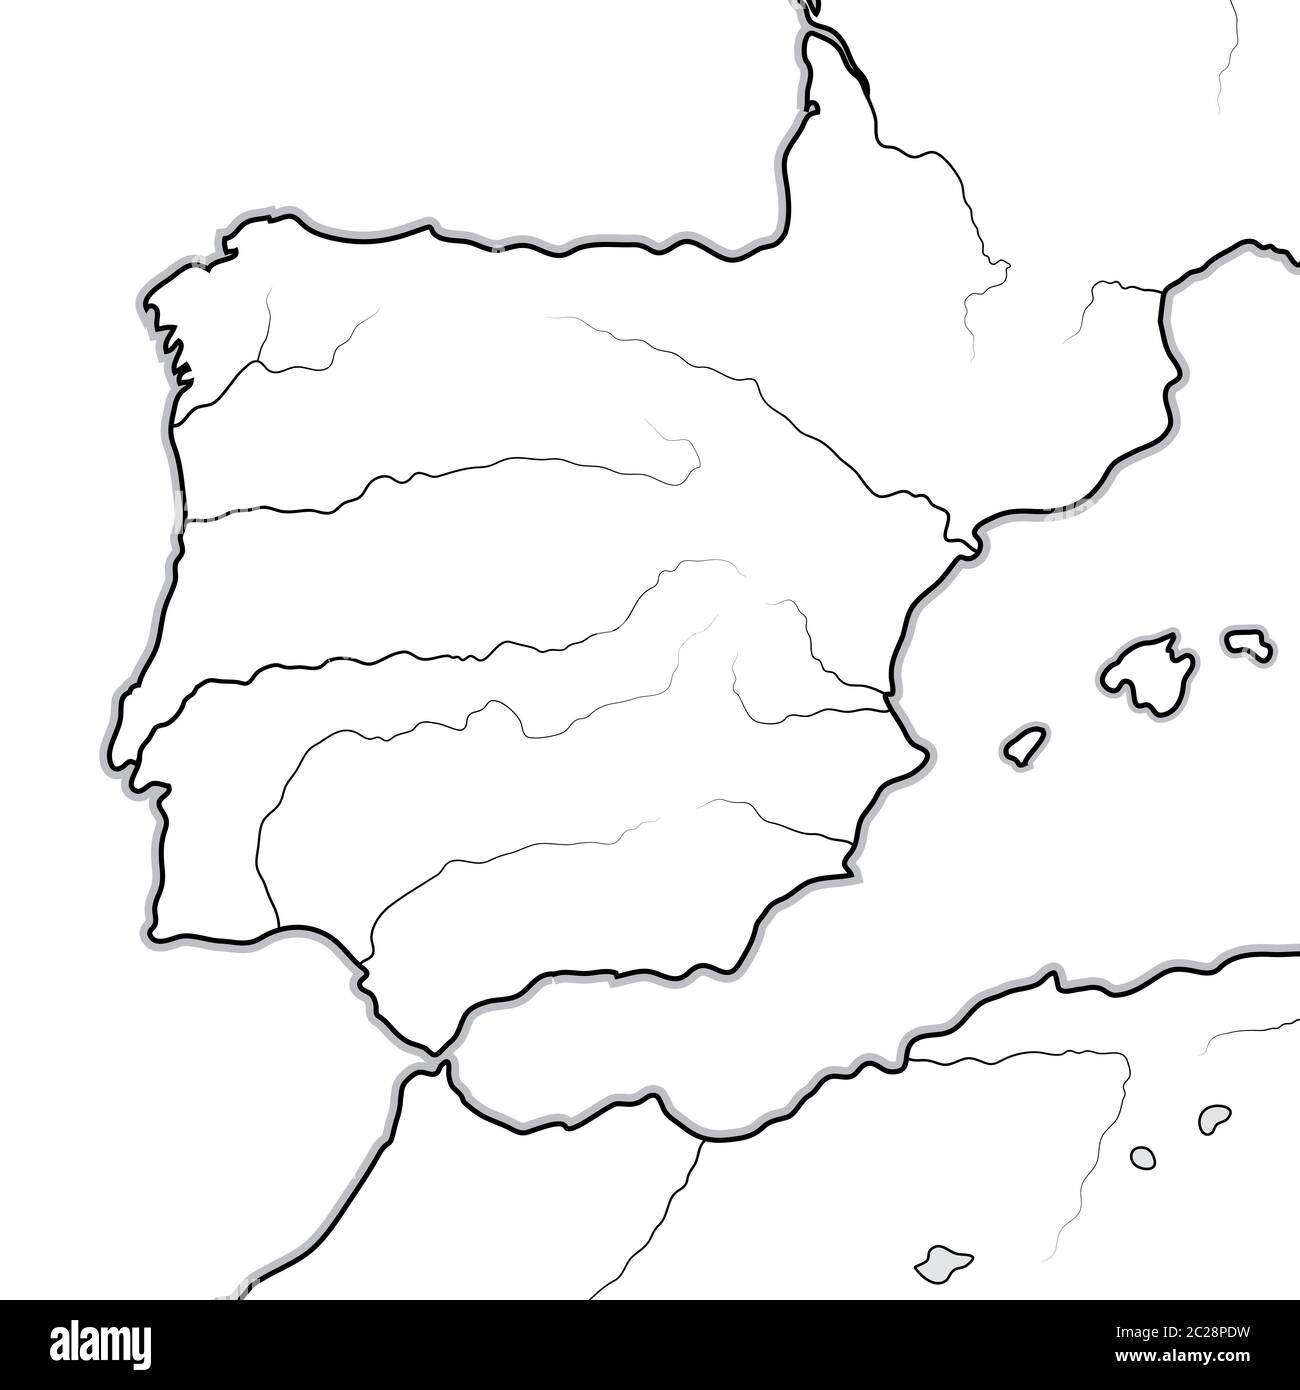 Portugal Mapa gratuito, mapa mudo gratuito, mapa en blanco